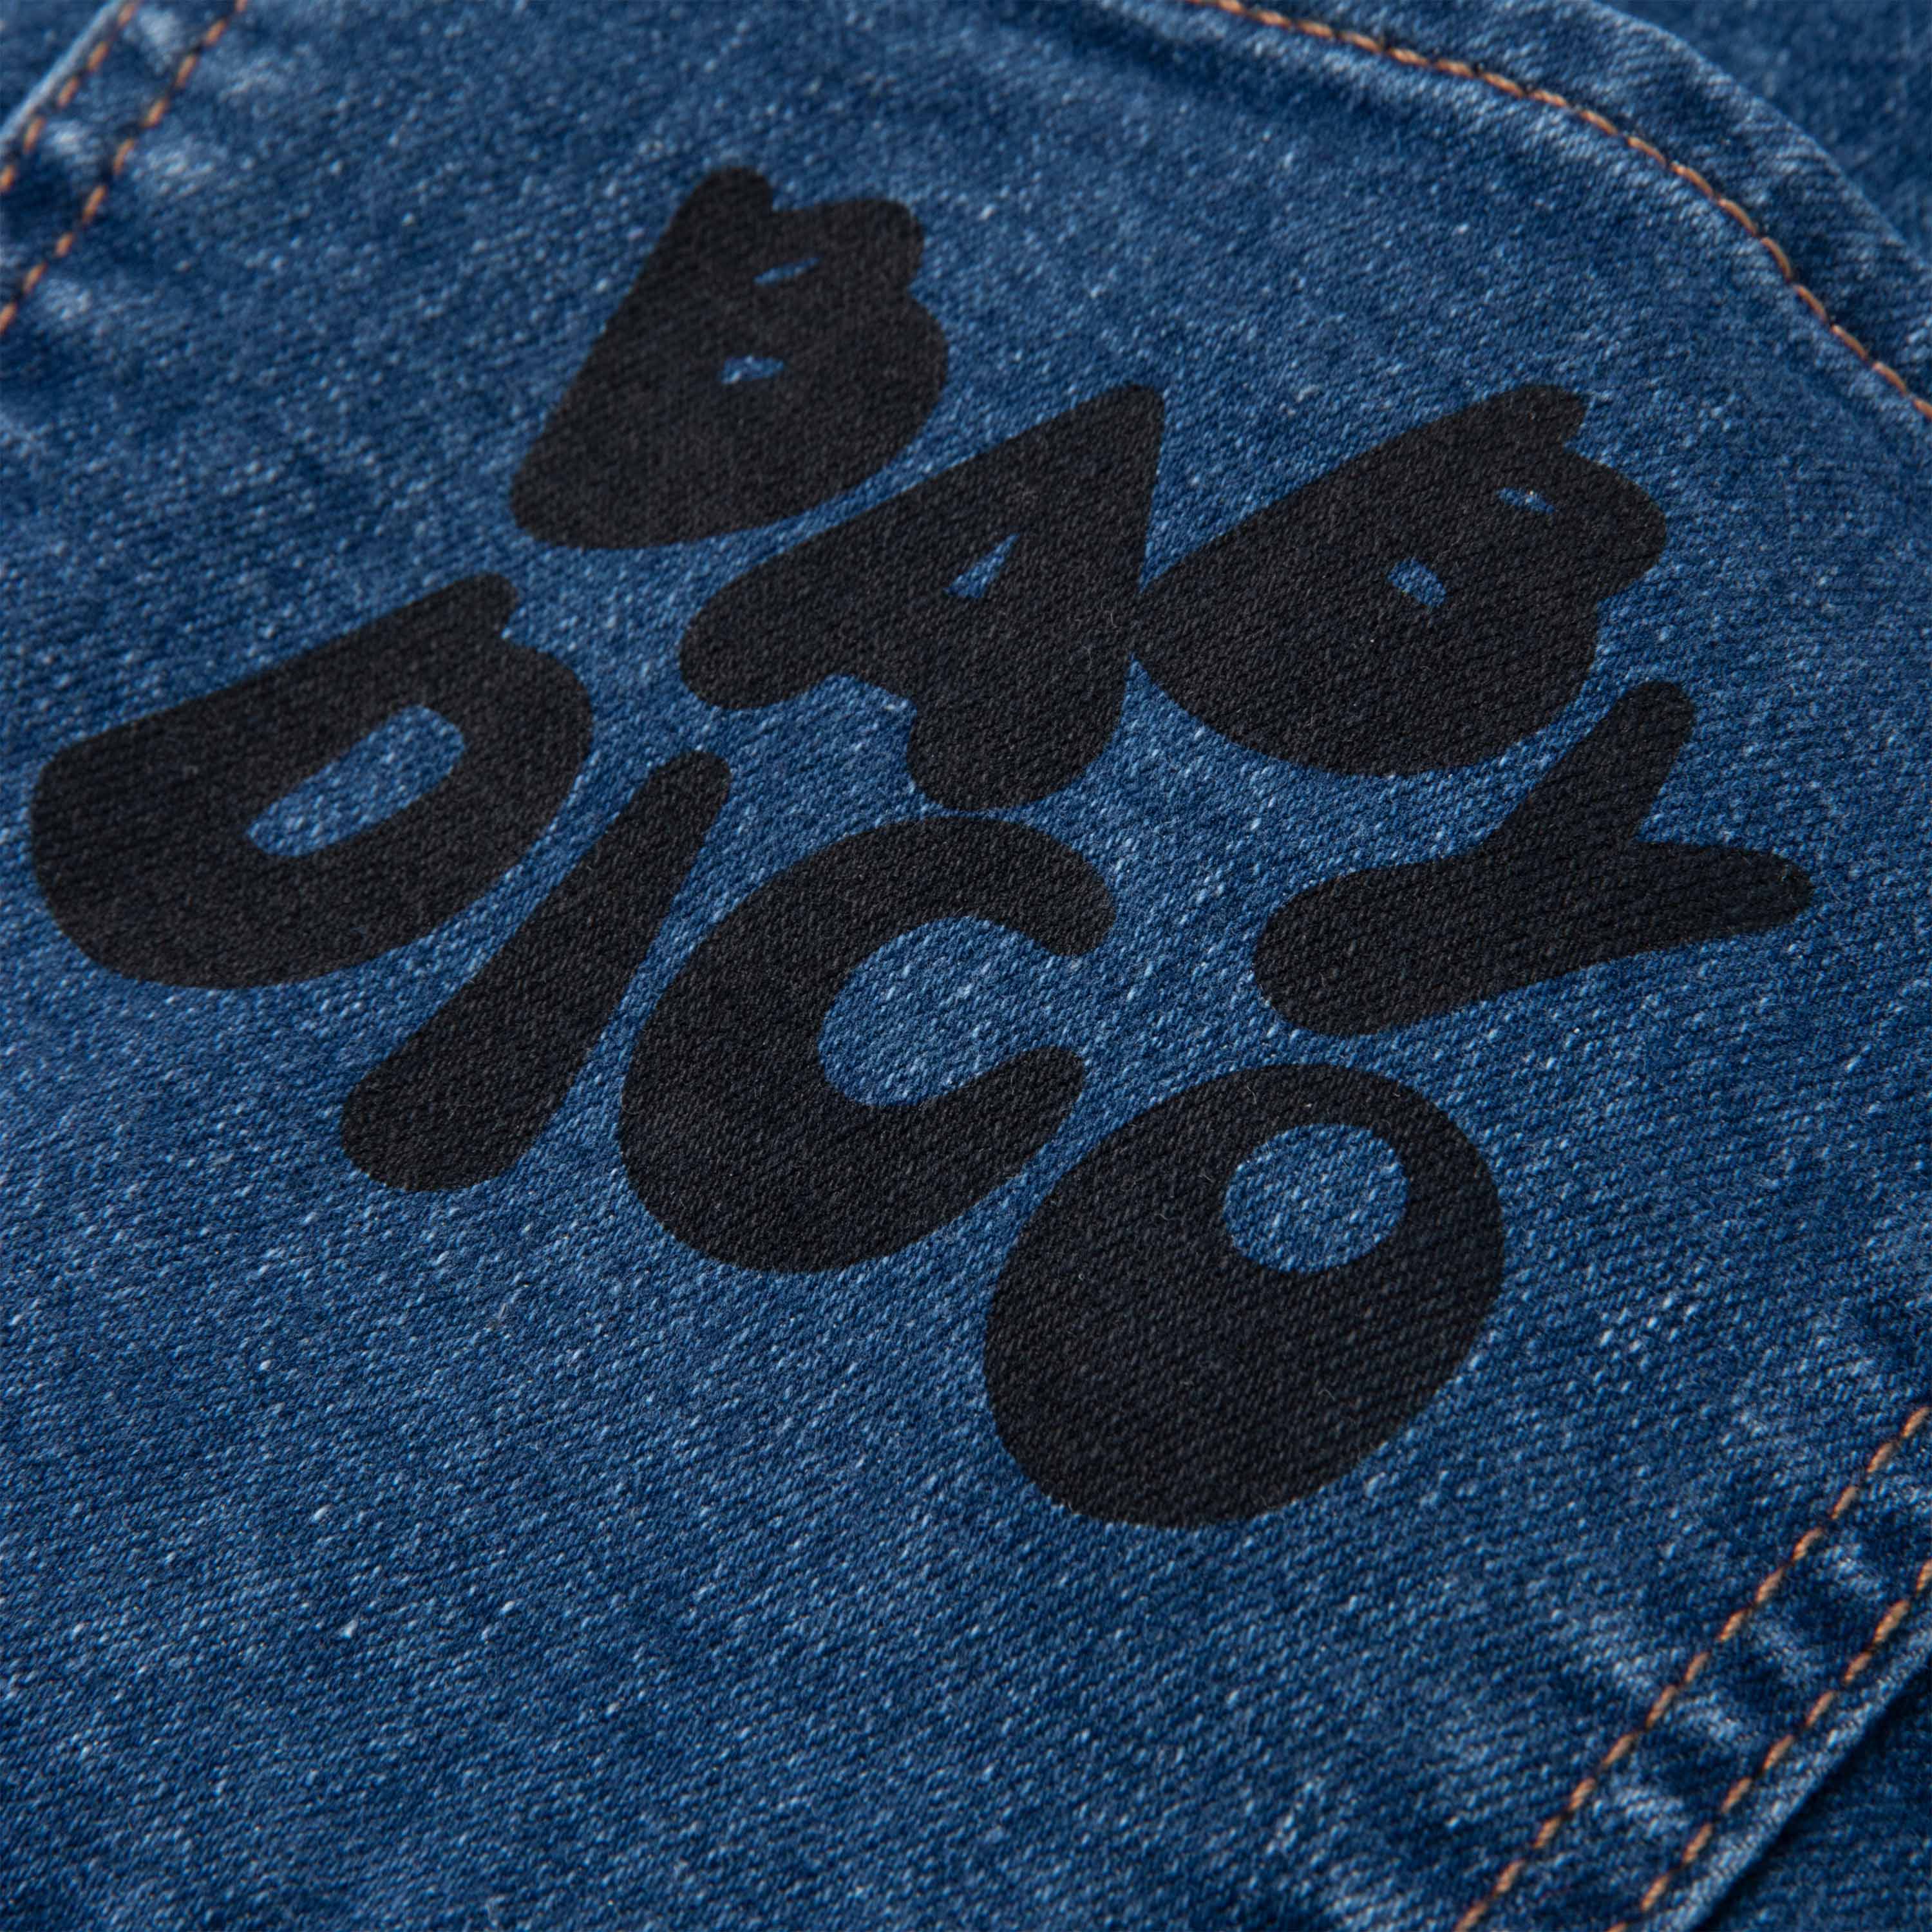 Quần Dico Boy Jeans - Blue Jean